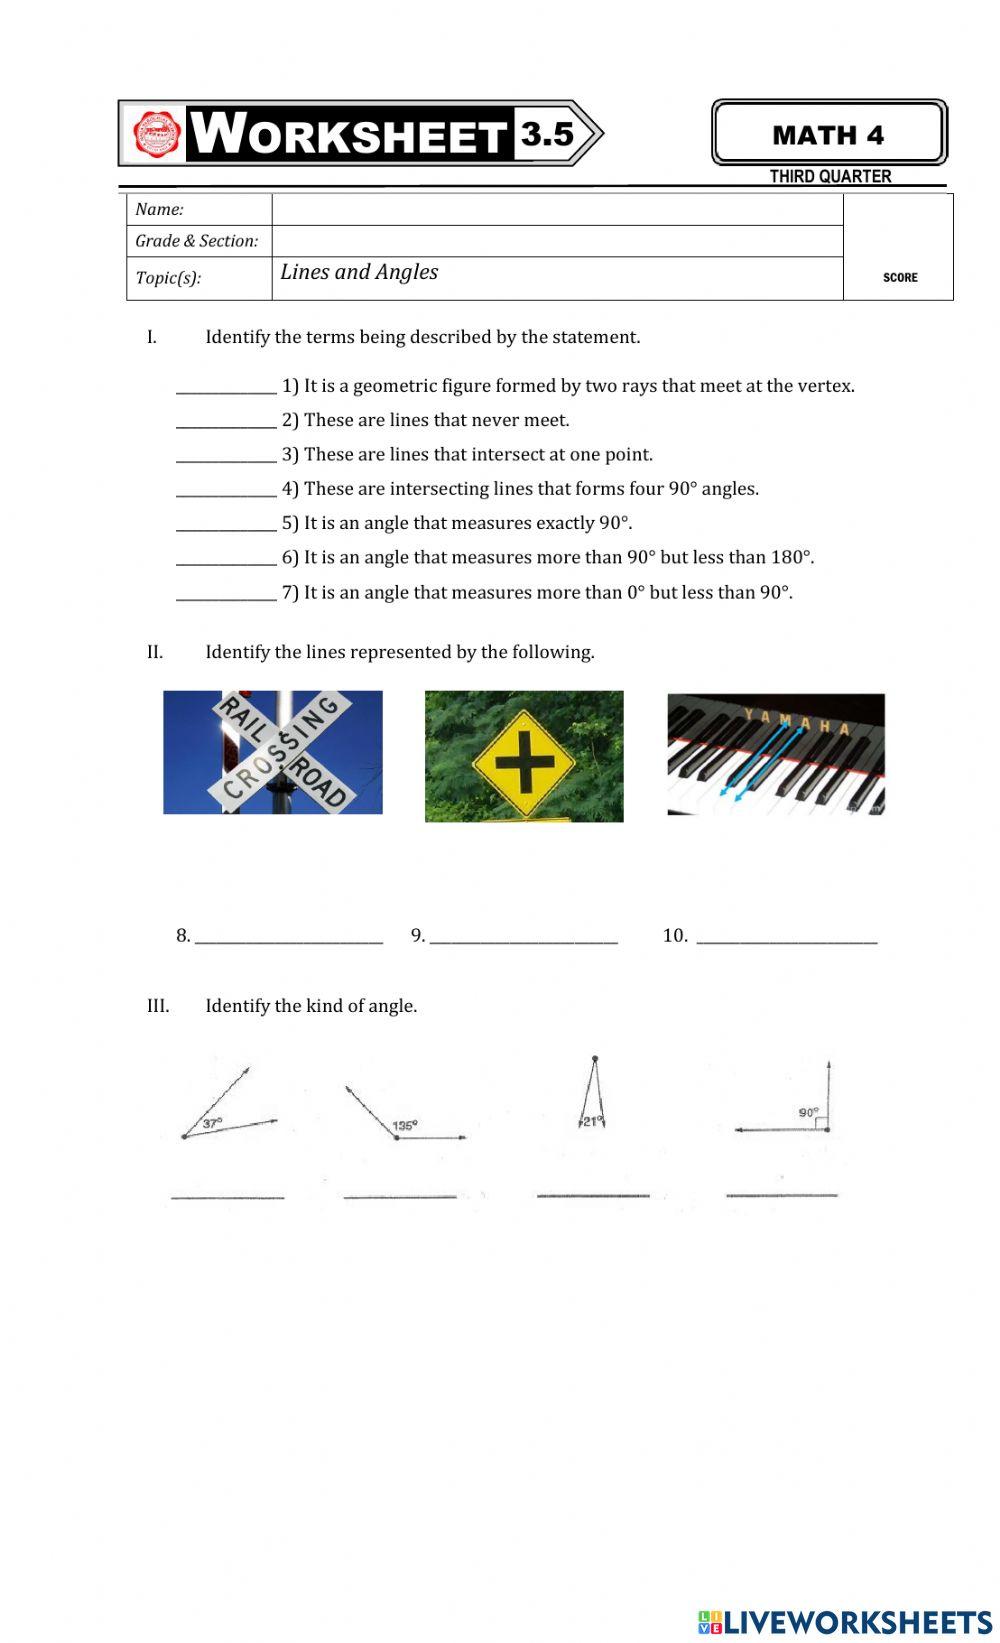 Math4 worksheet 3.5